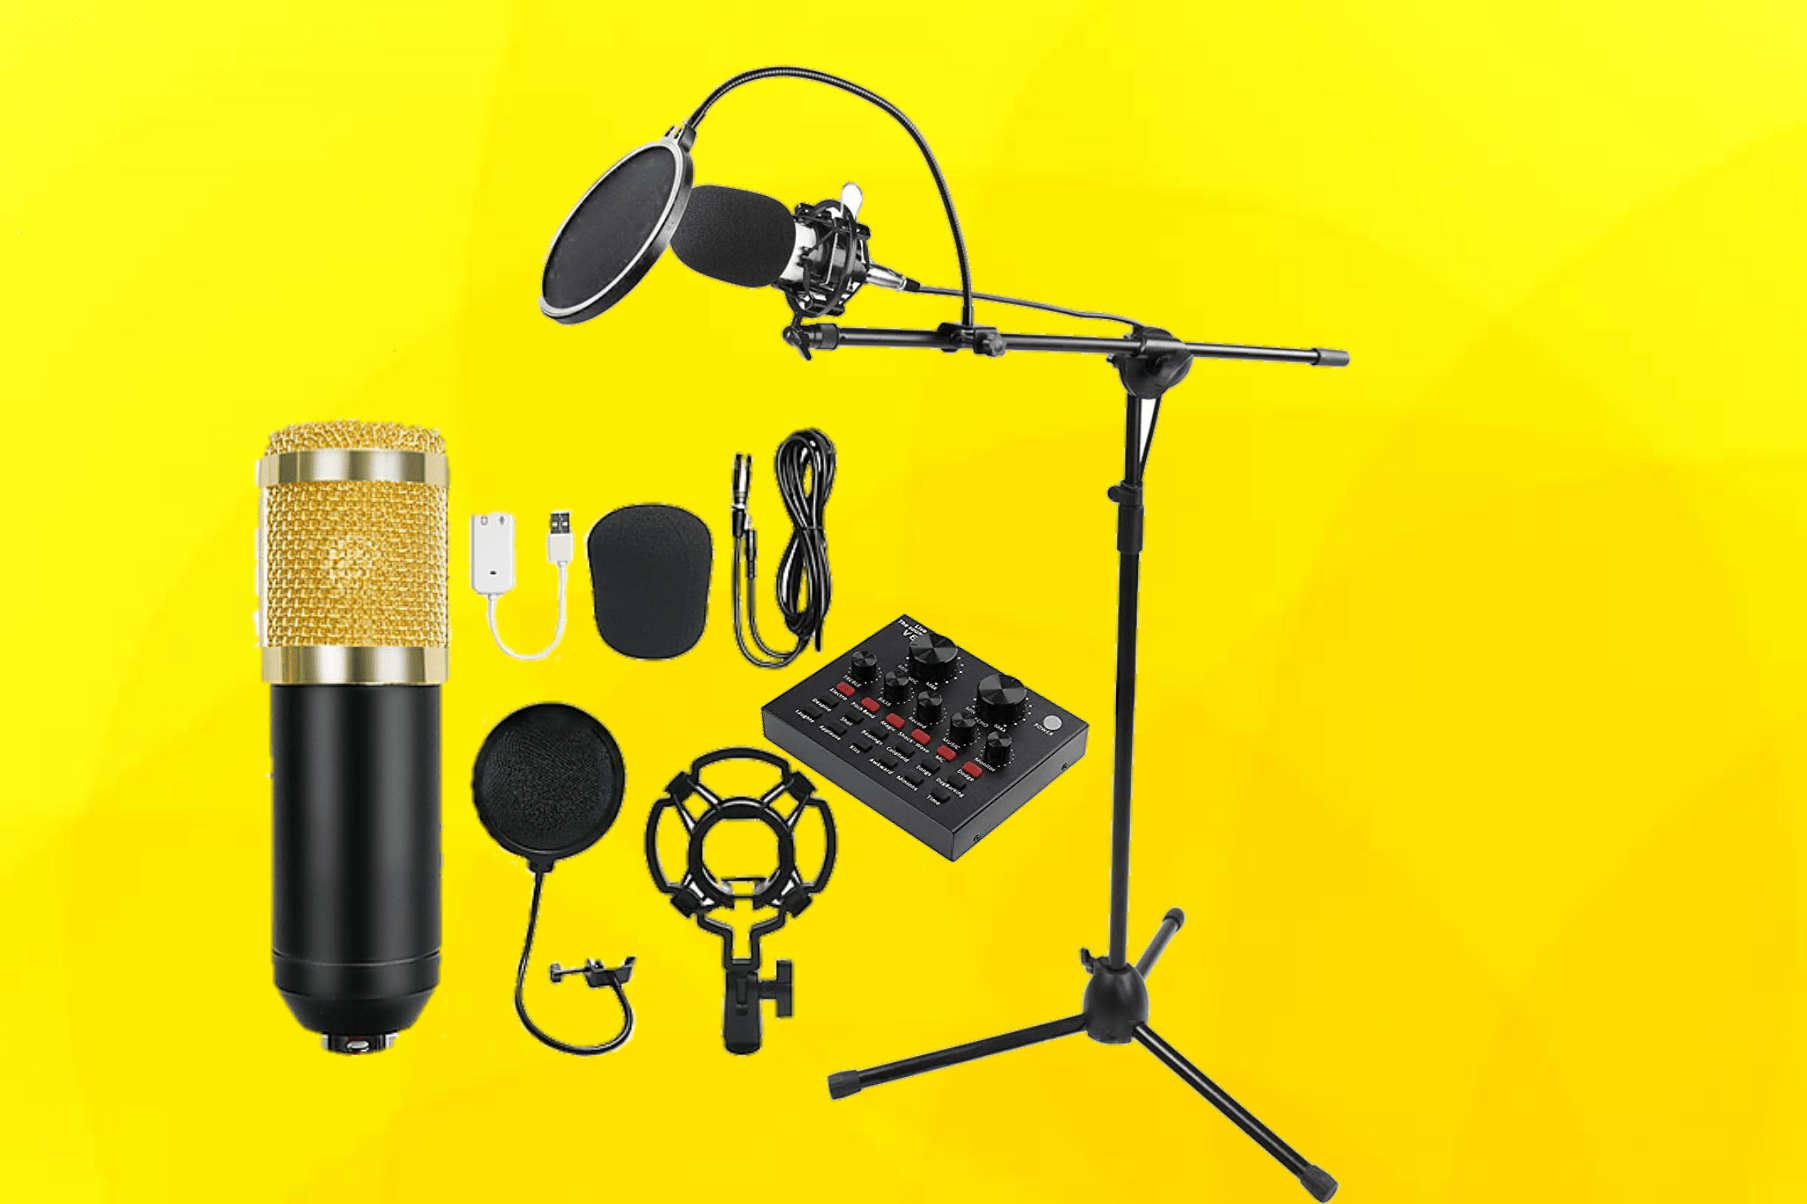 Techtest Mic Stand for Studio Recording Singing Video Floor